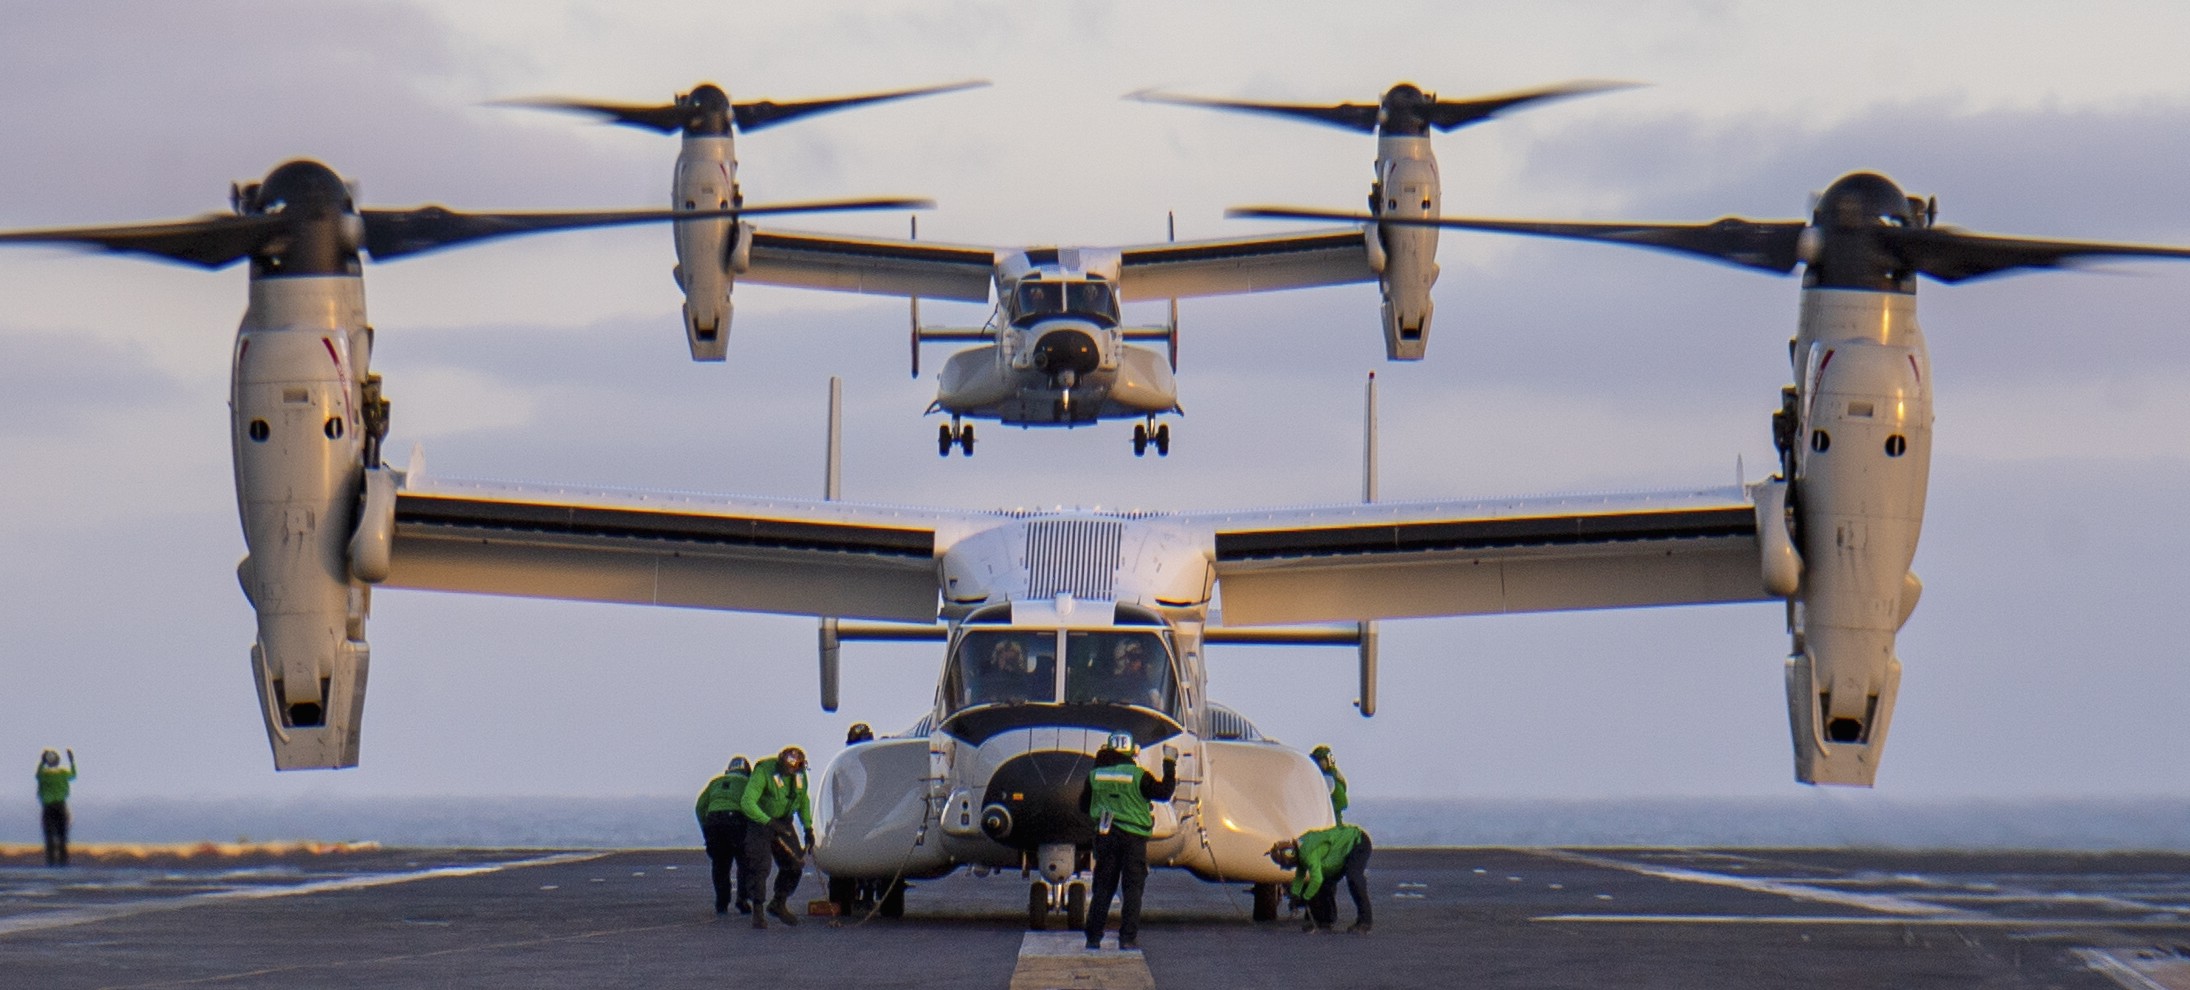 vrm-50 sun hawks fleet logistics multi mission squadron us navy cmv-22b osprey replacement frs uss nimitz cvn-68 25